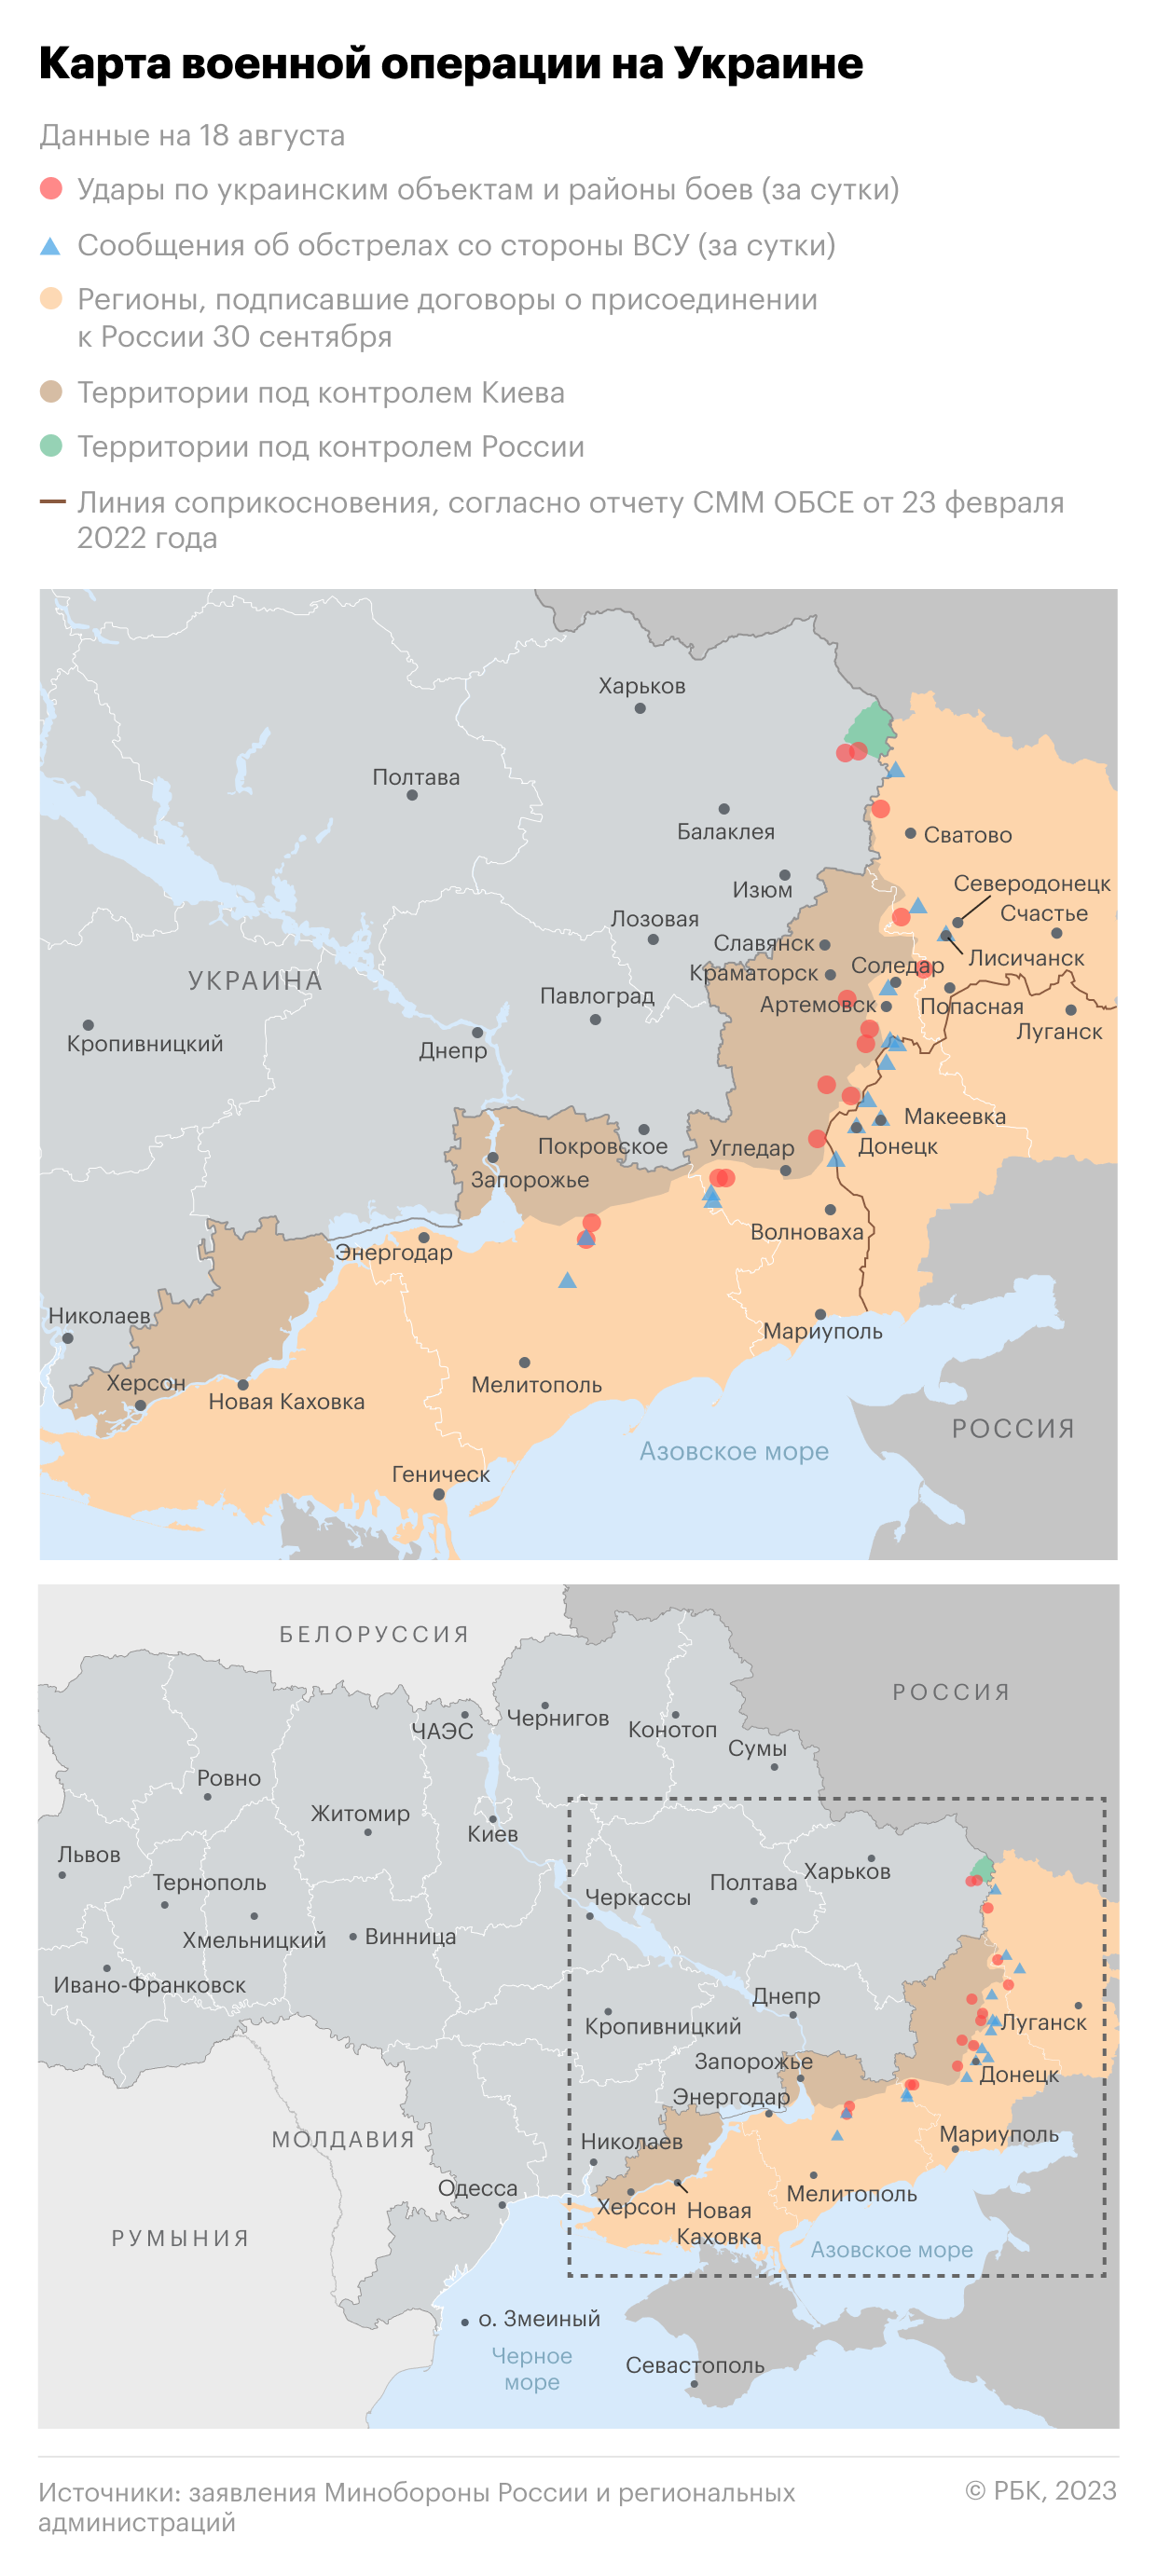 Военная операция на Украине. Карта на 18 августа